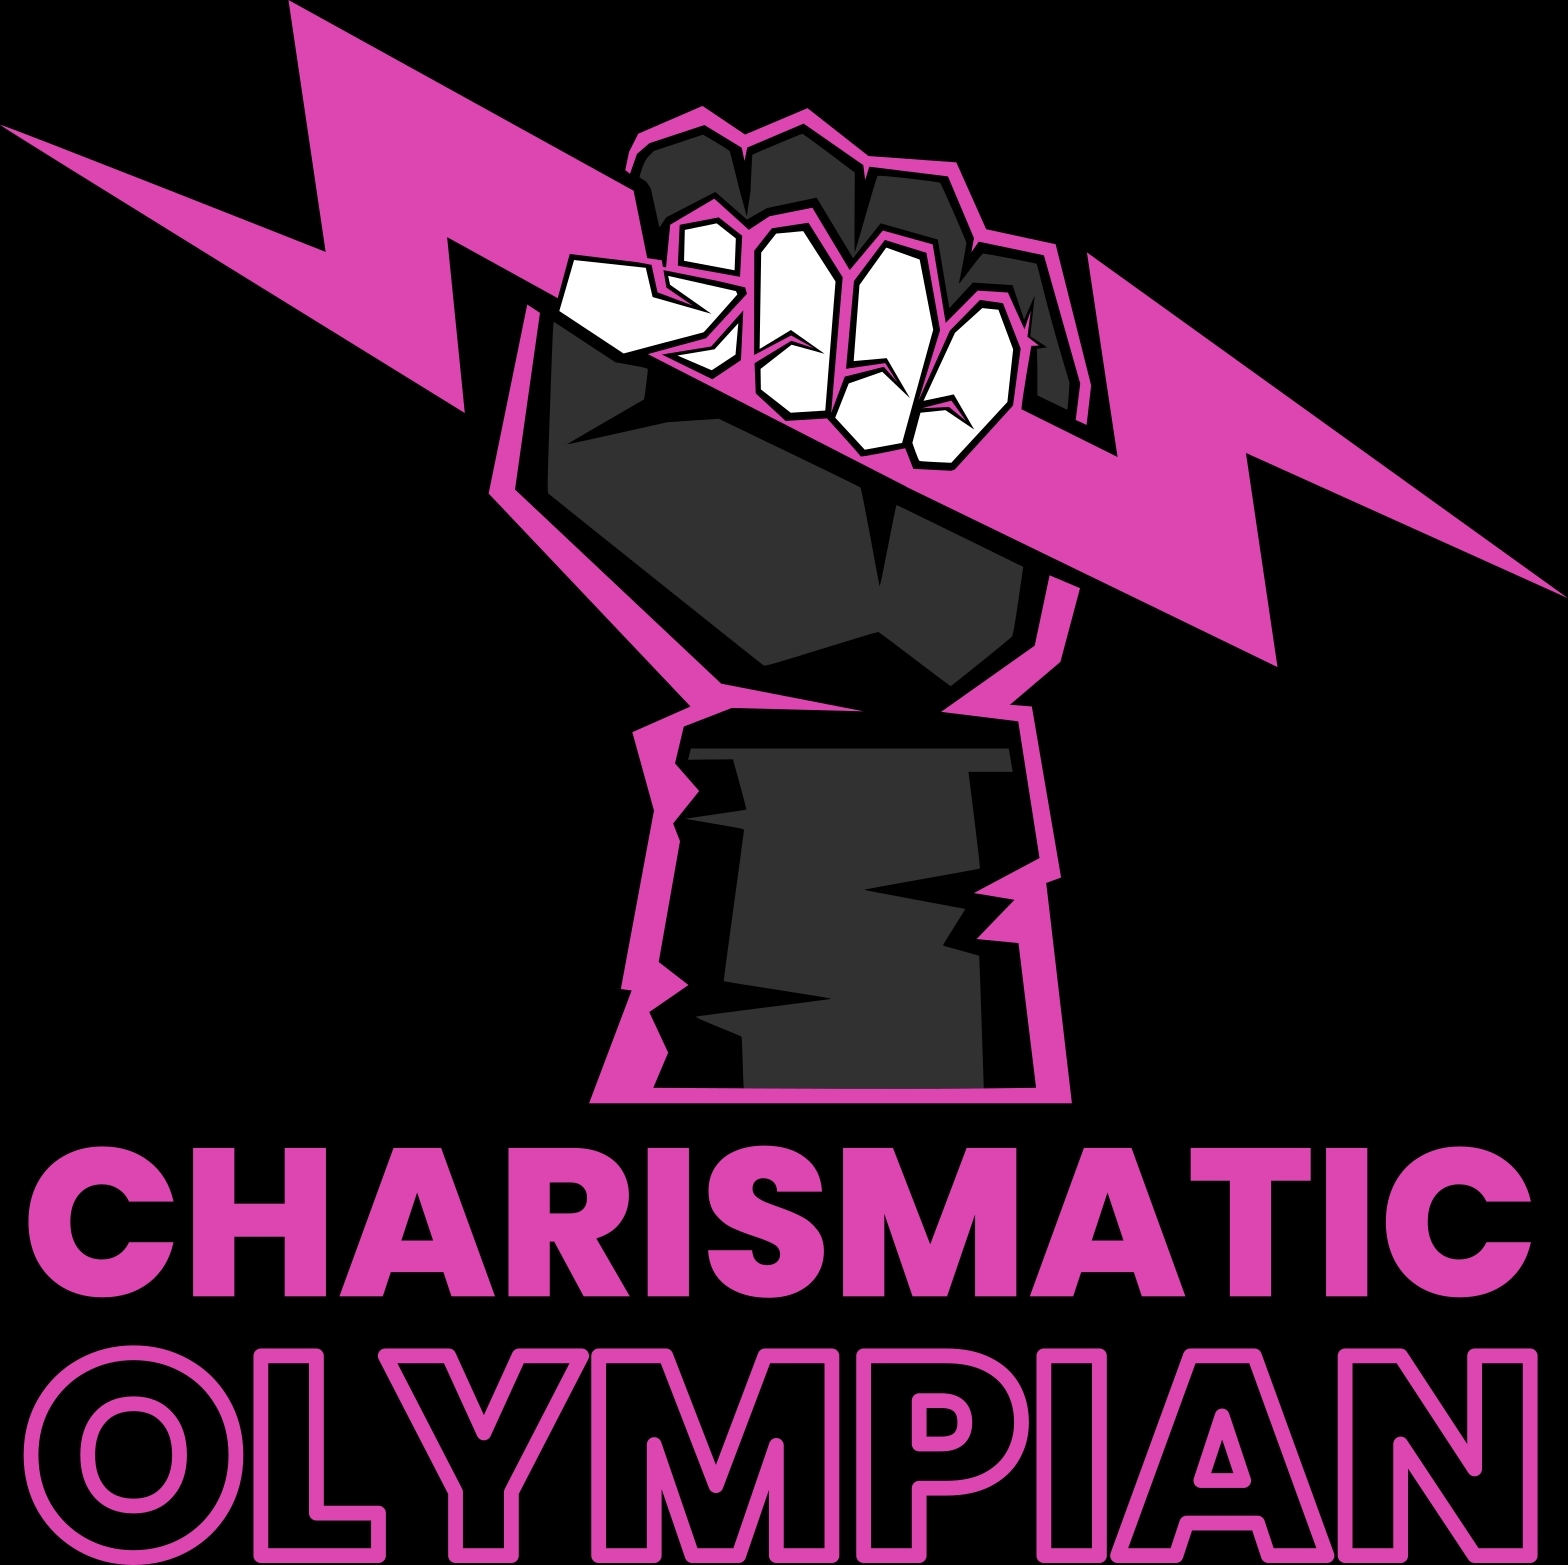 Charismatic_Olympian_Regular39dehp.jpg